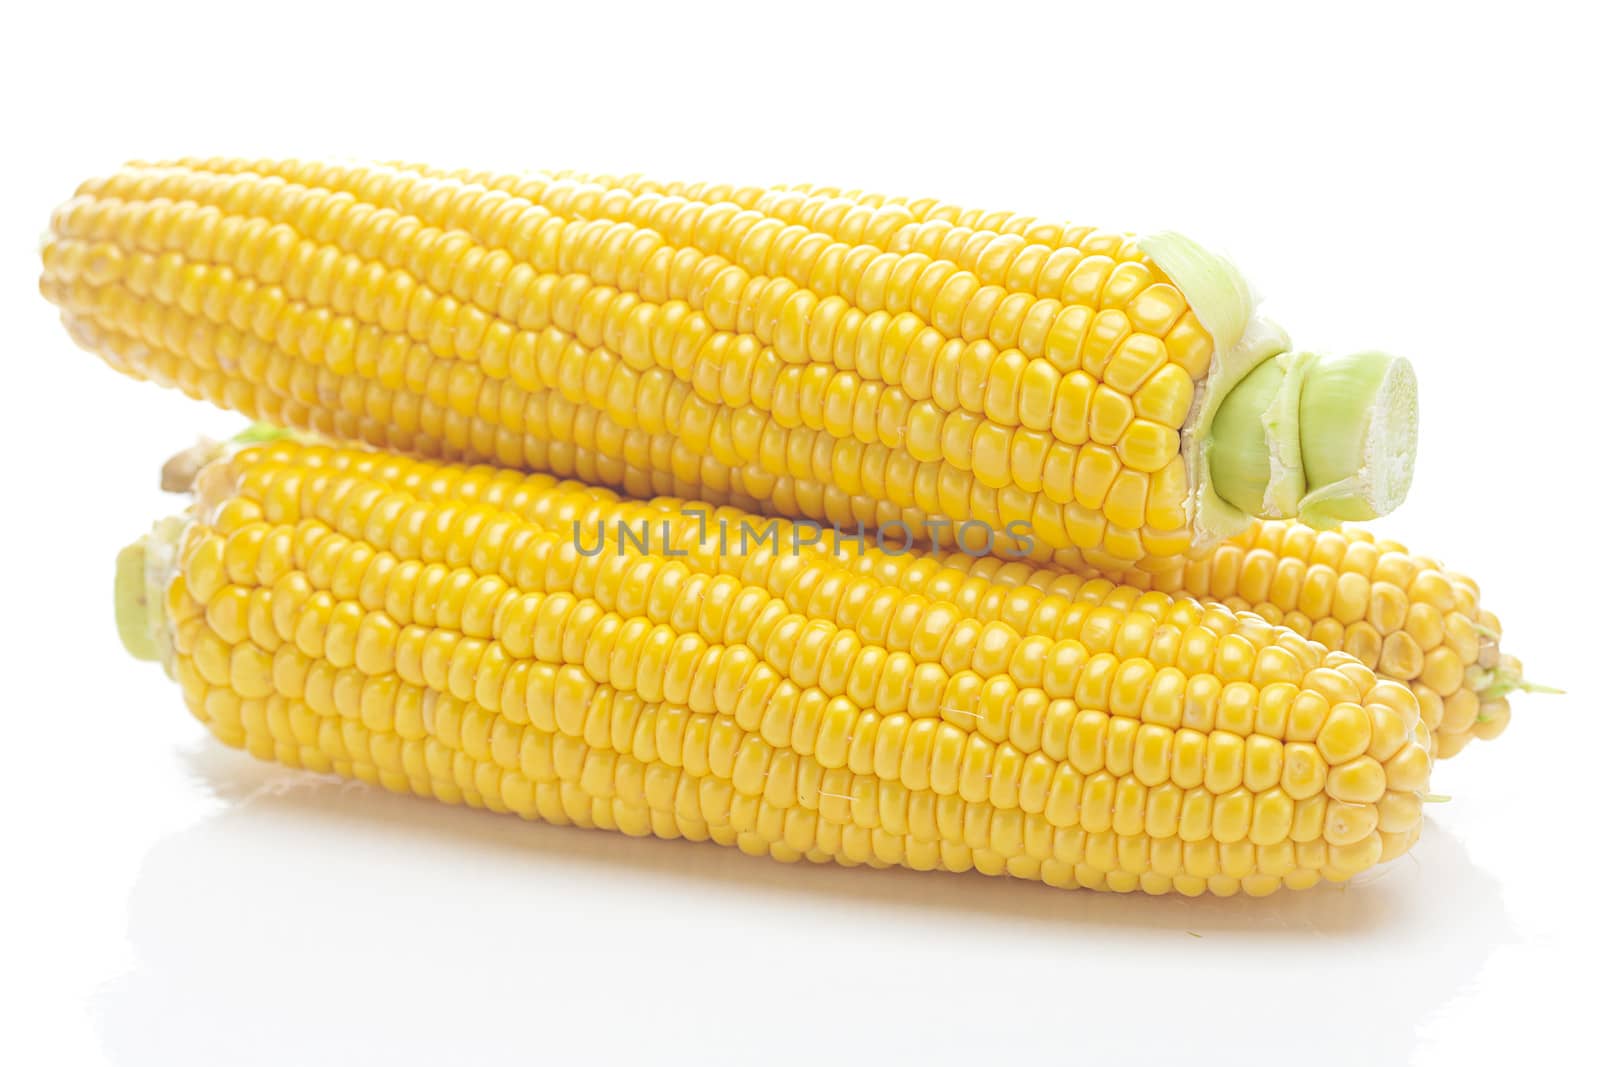 ripe yellow corn isolated on white